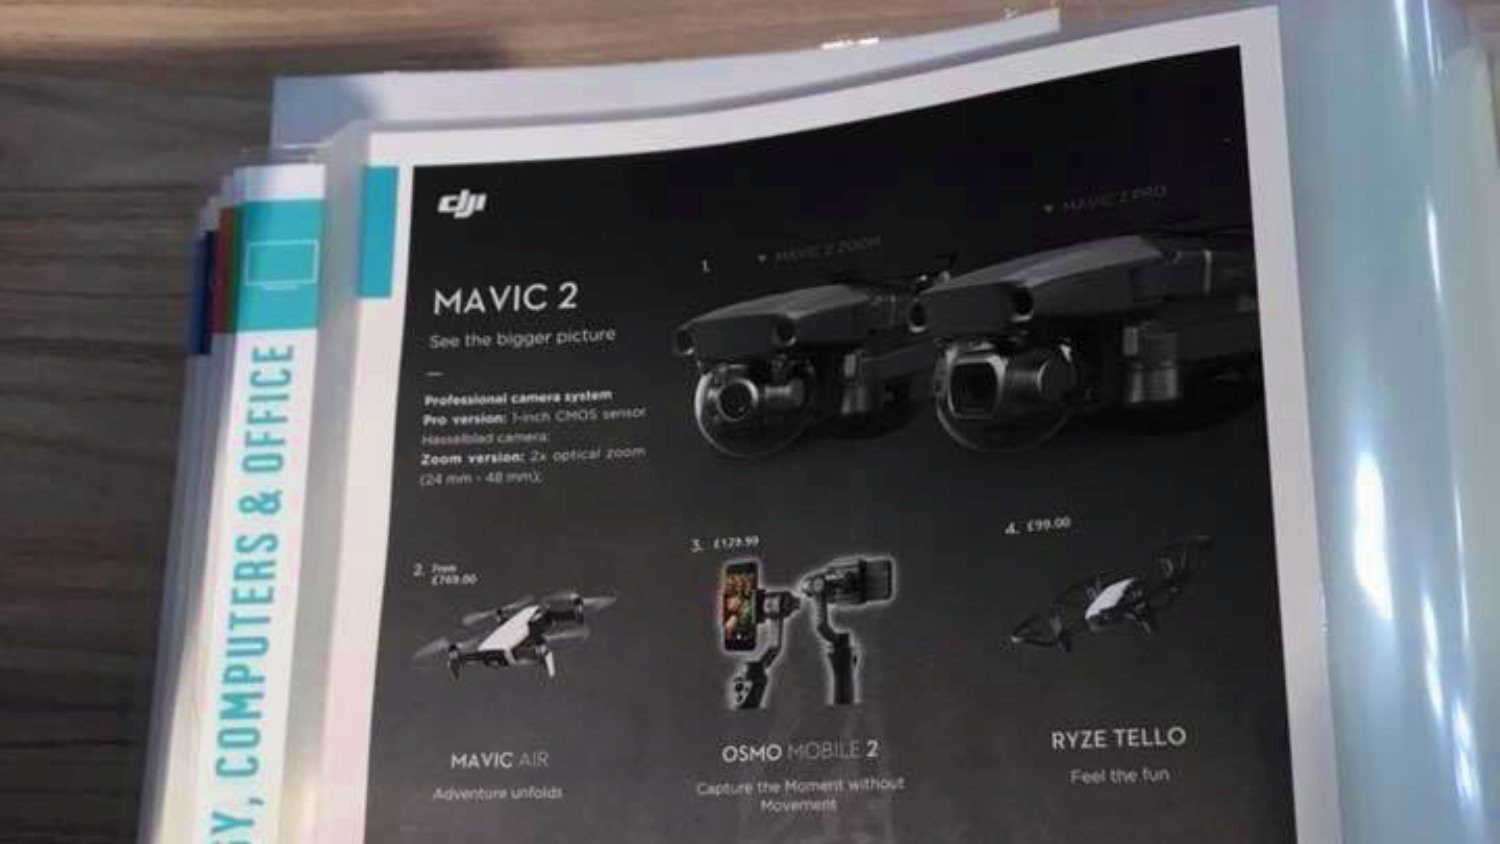 Breaking News: DJI Mavic 2 listed in UK Argos catalog